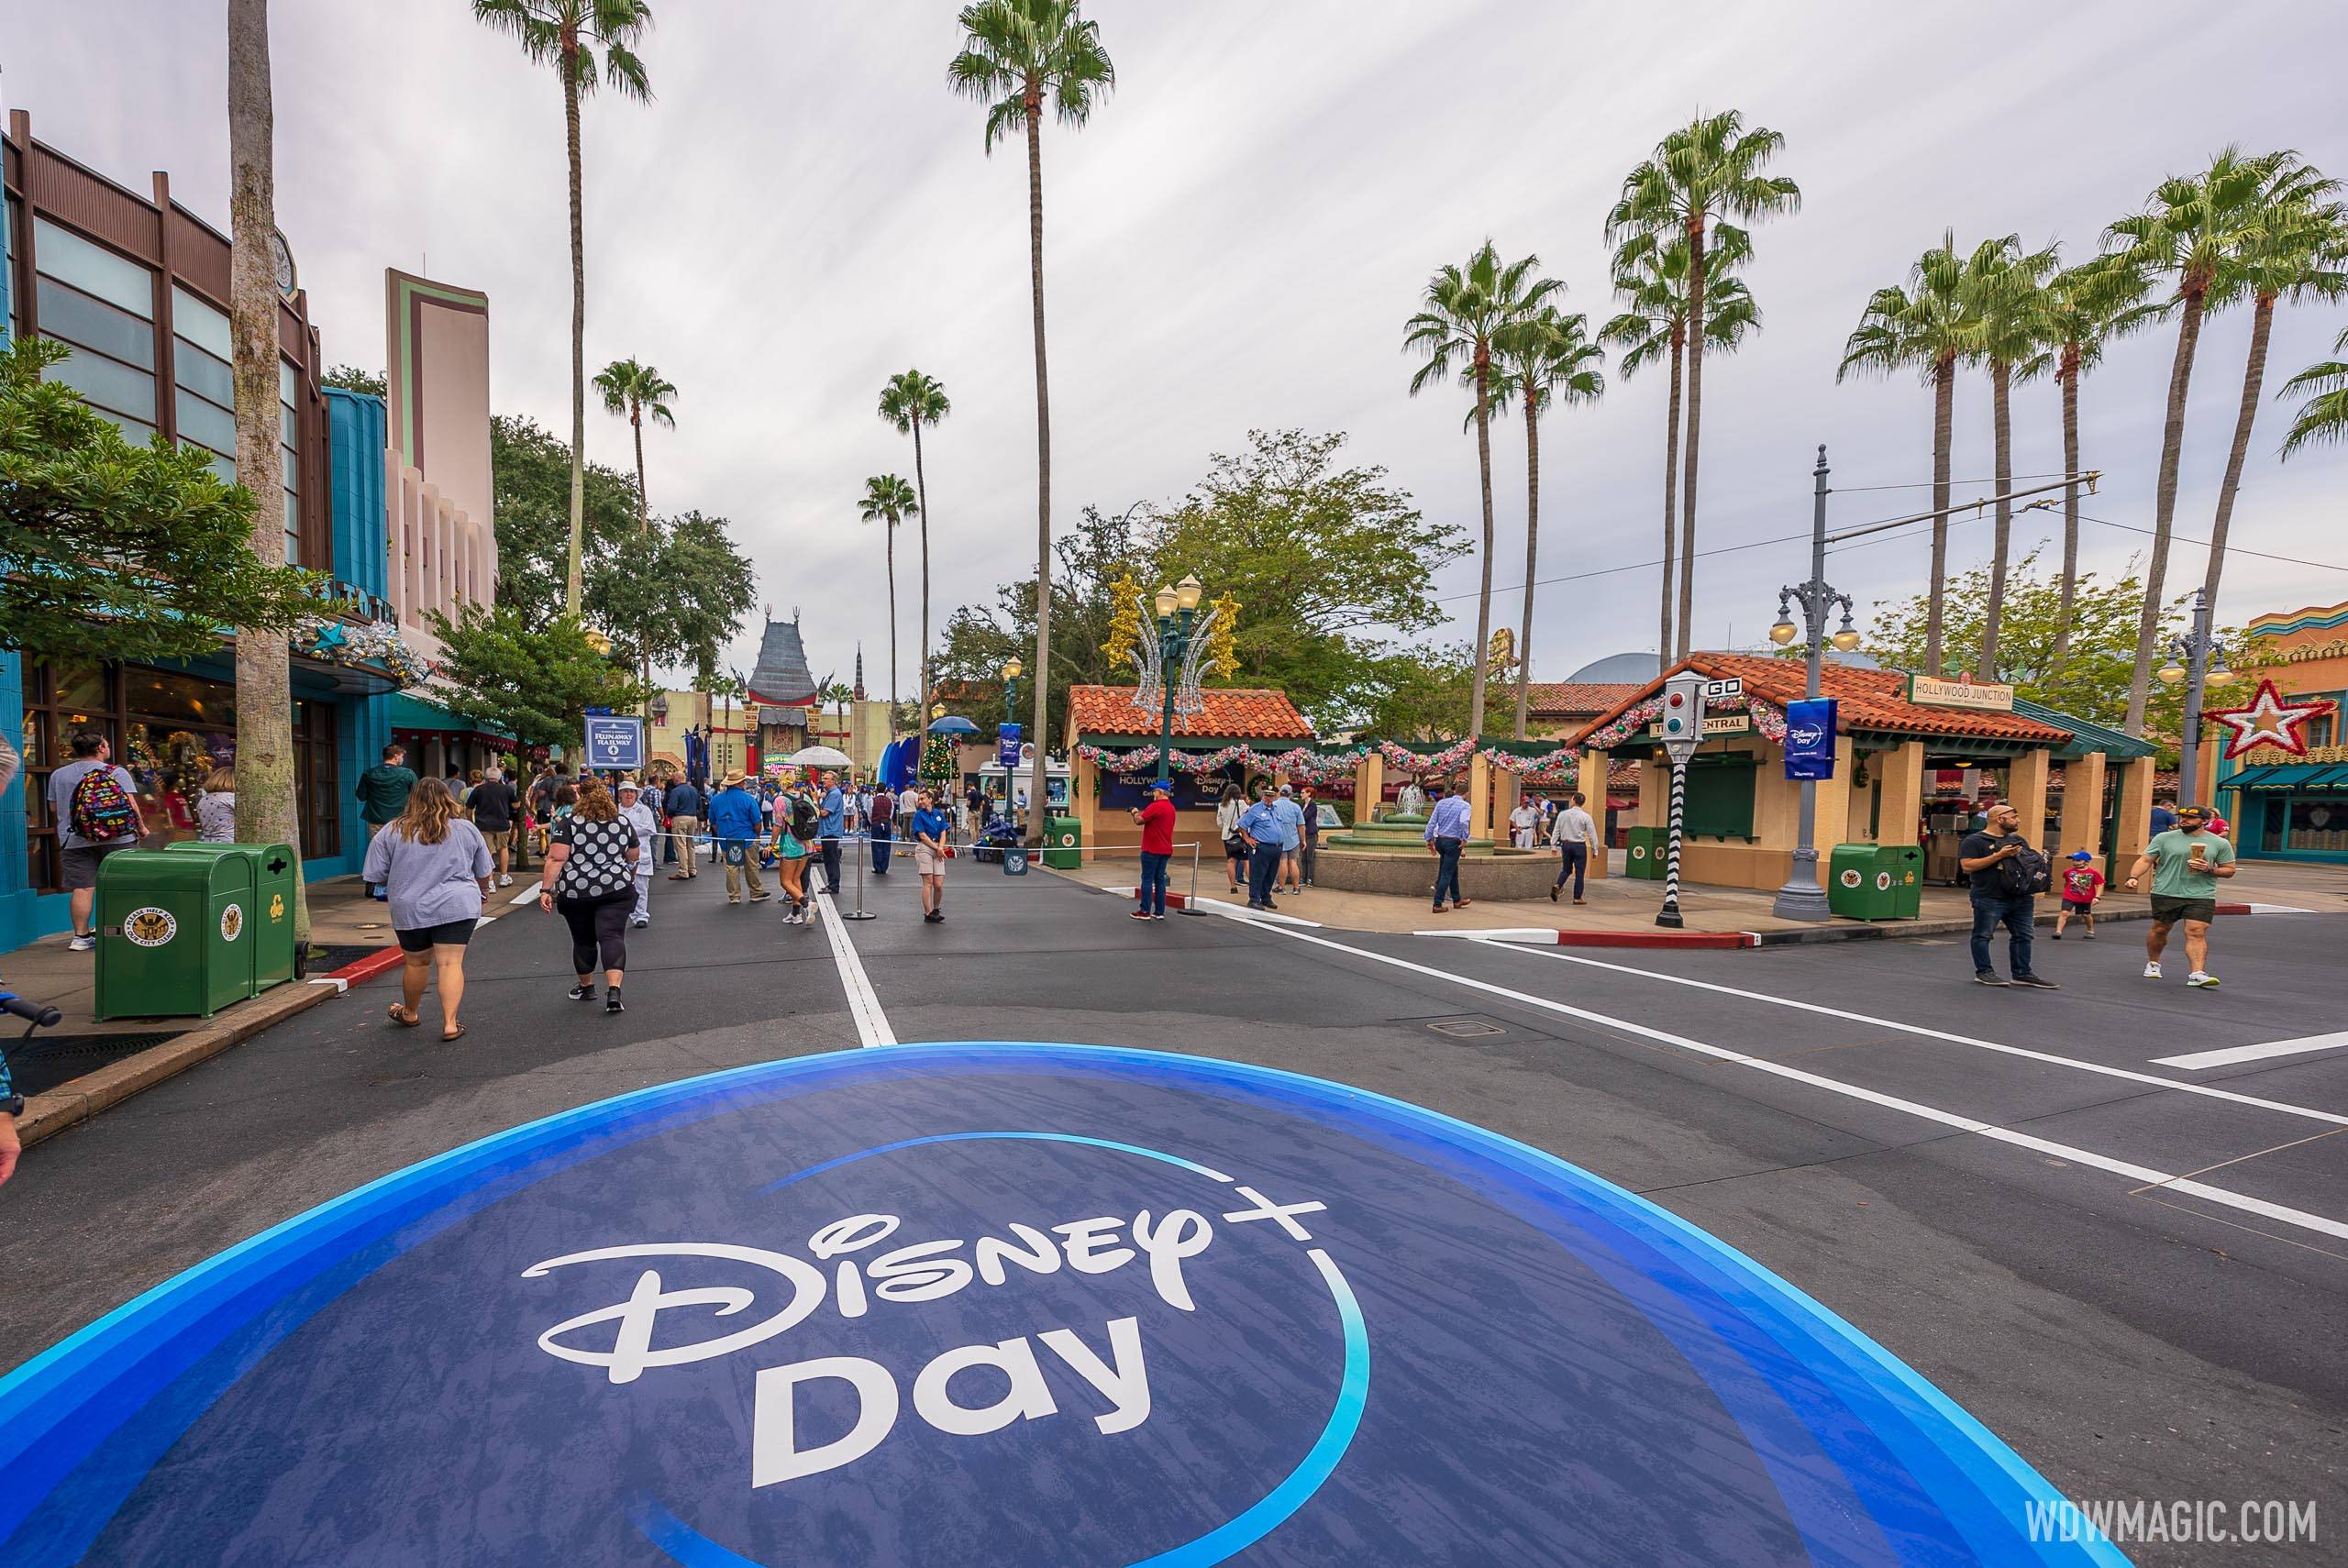 Disney+ Day gets underway at Disney's Hollywood Studios